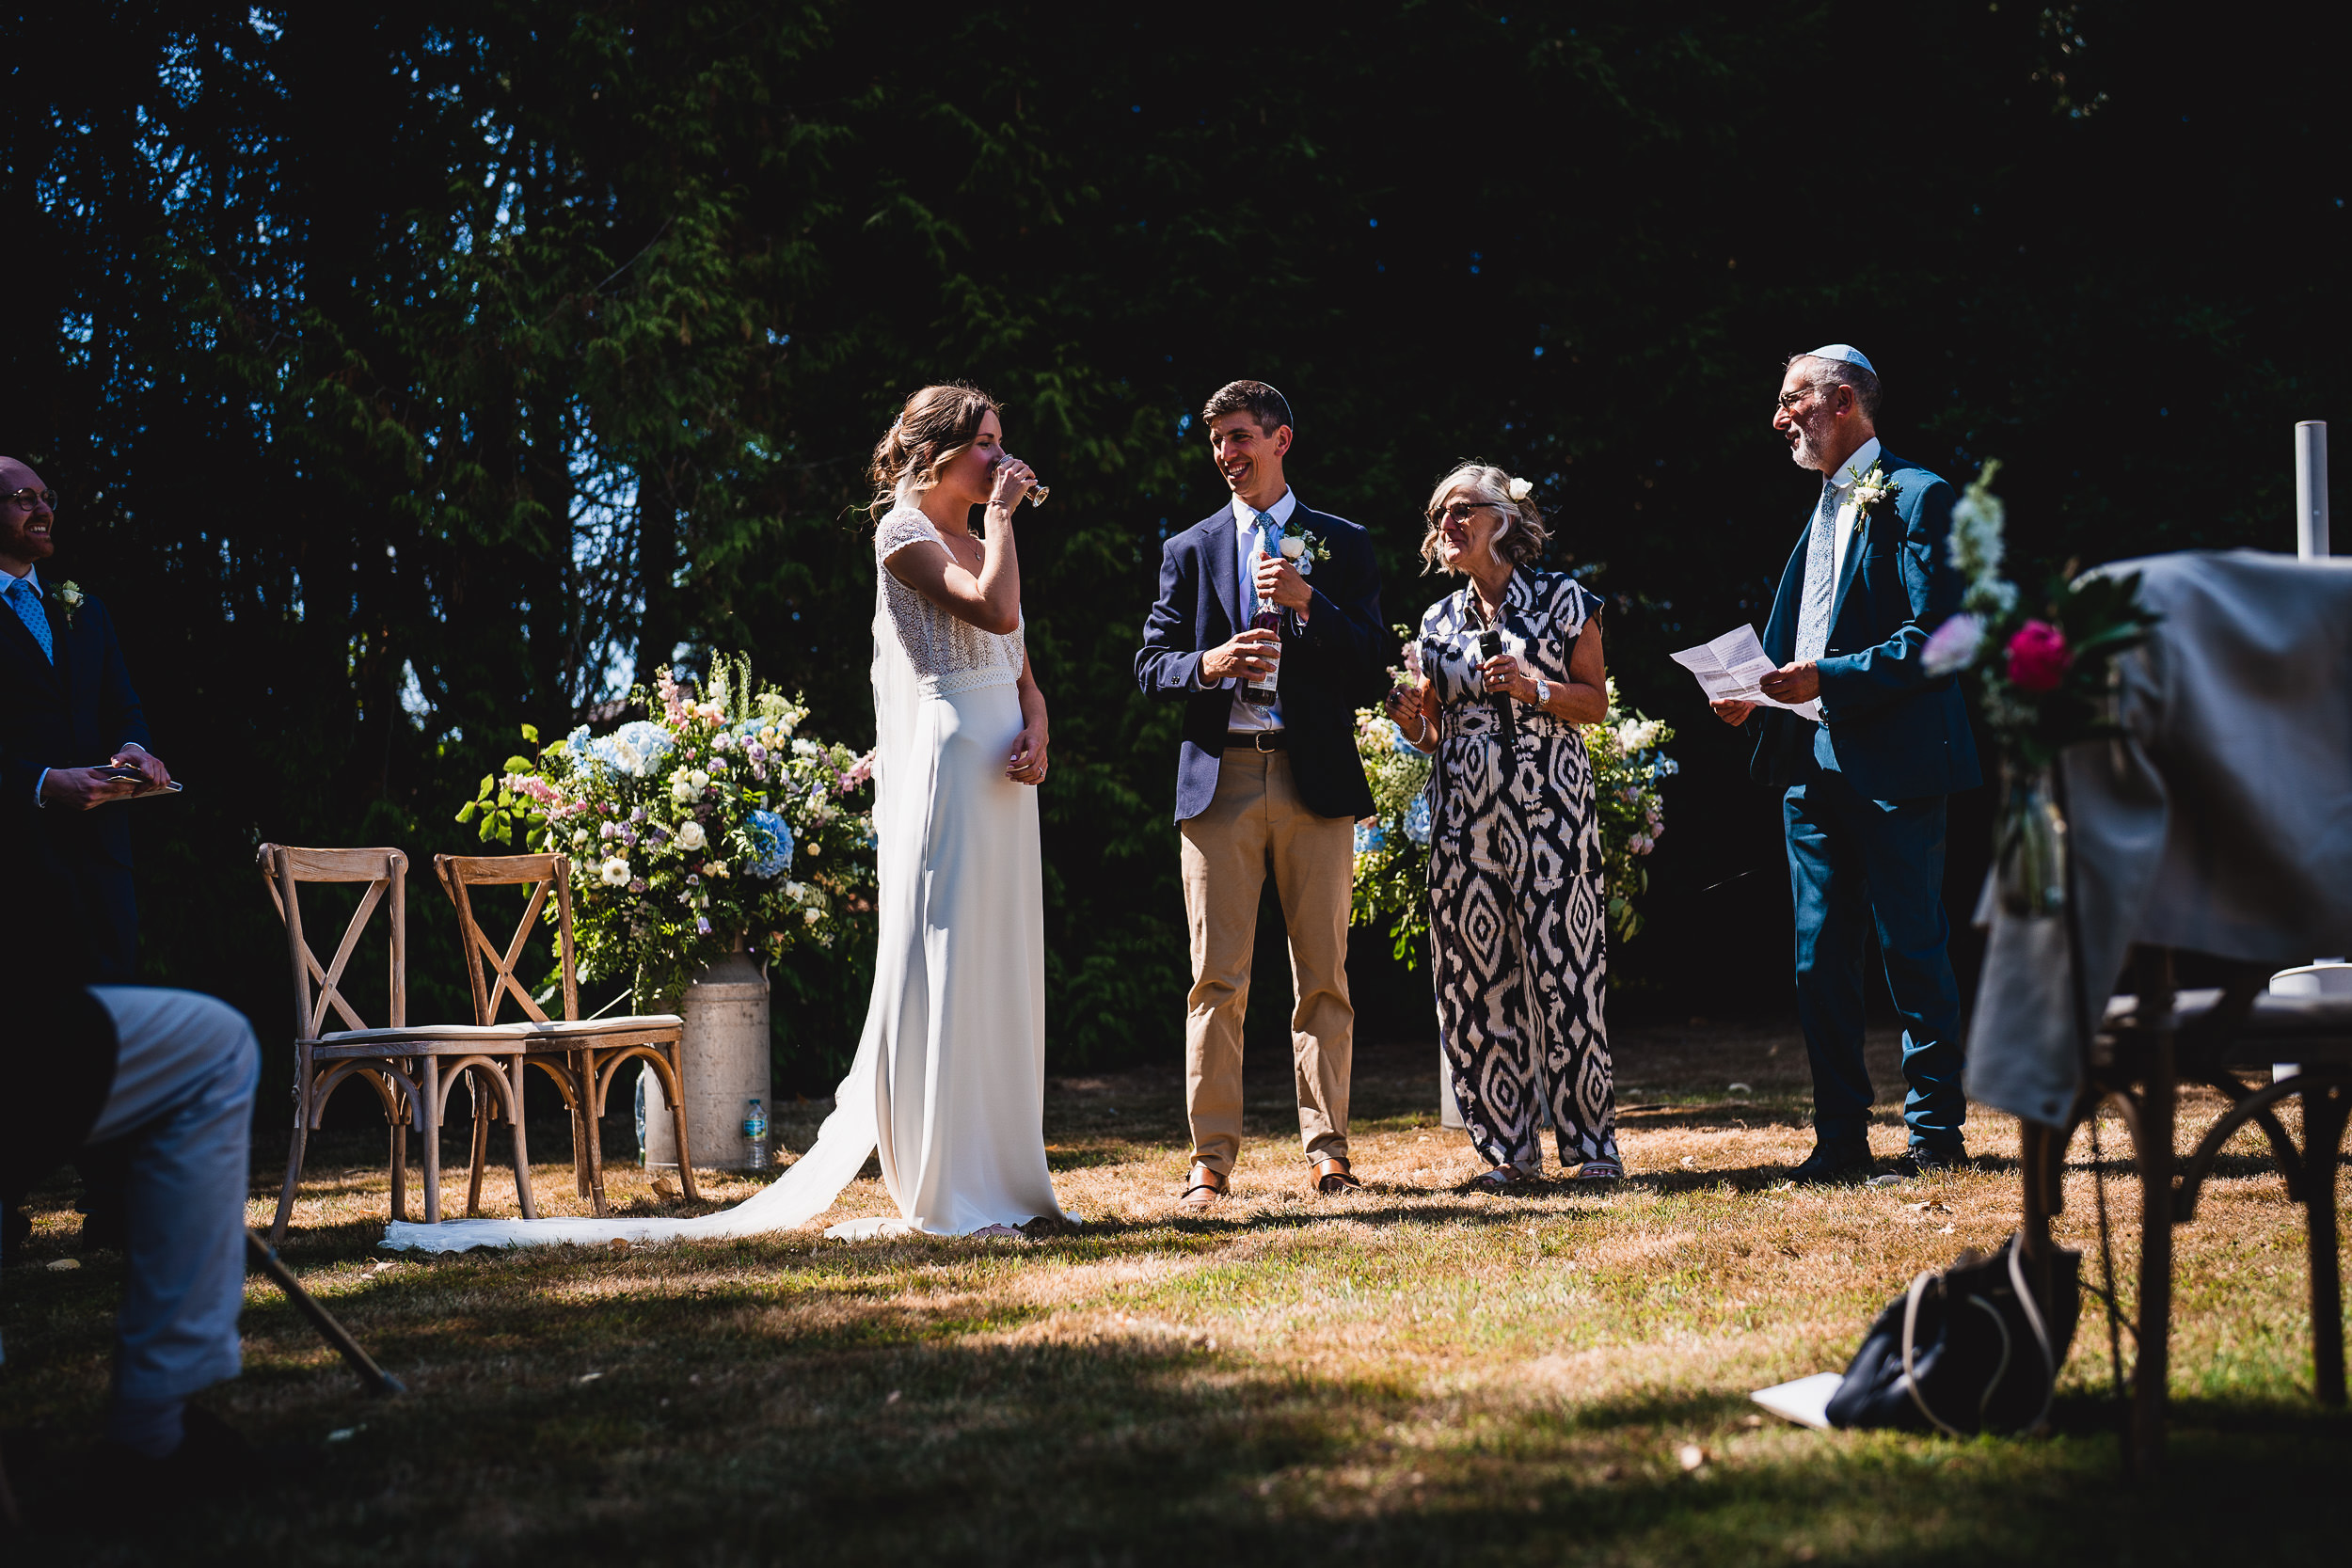 A garden wedding ceremony captured by a skilled wedding photographer.